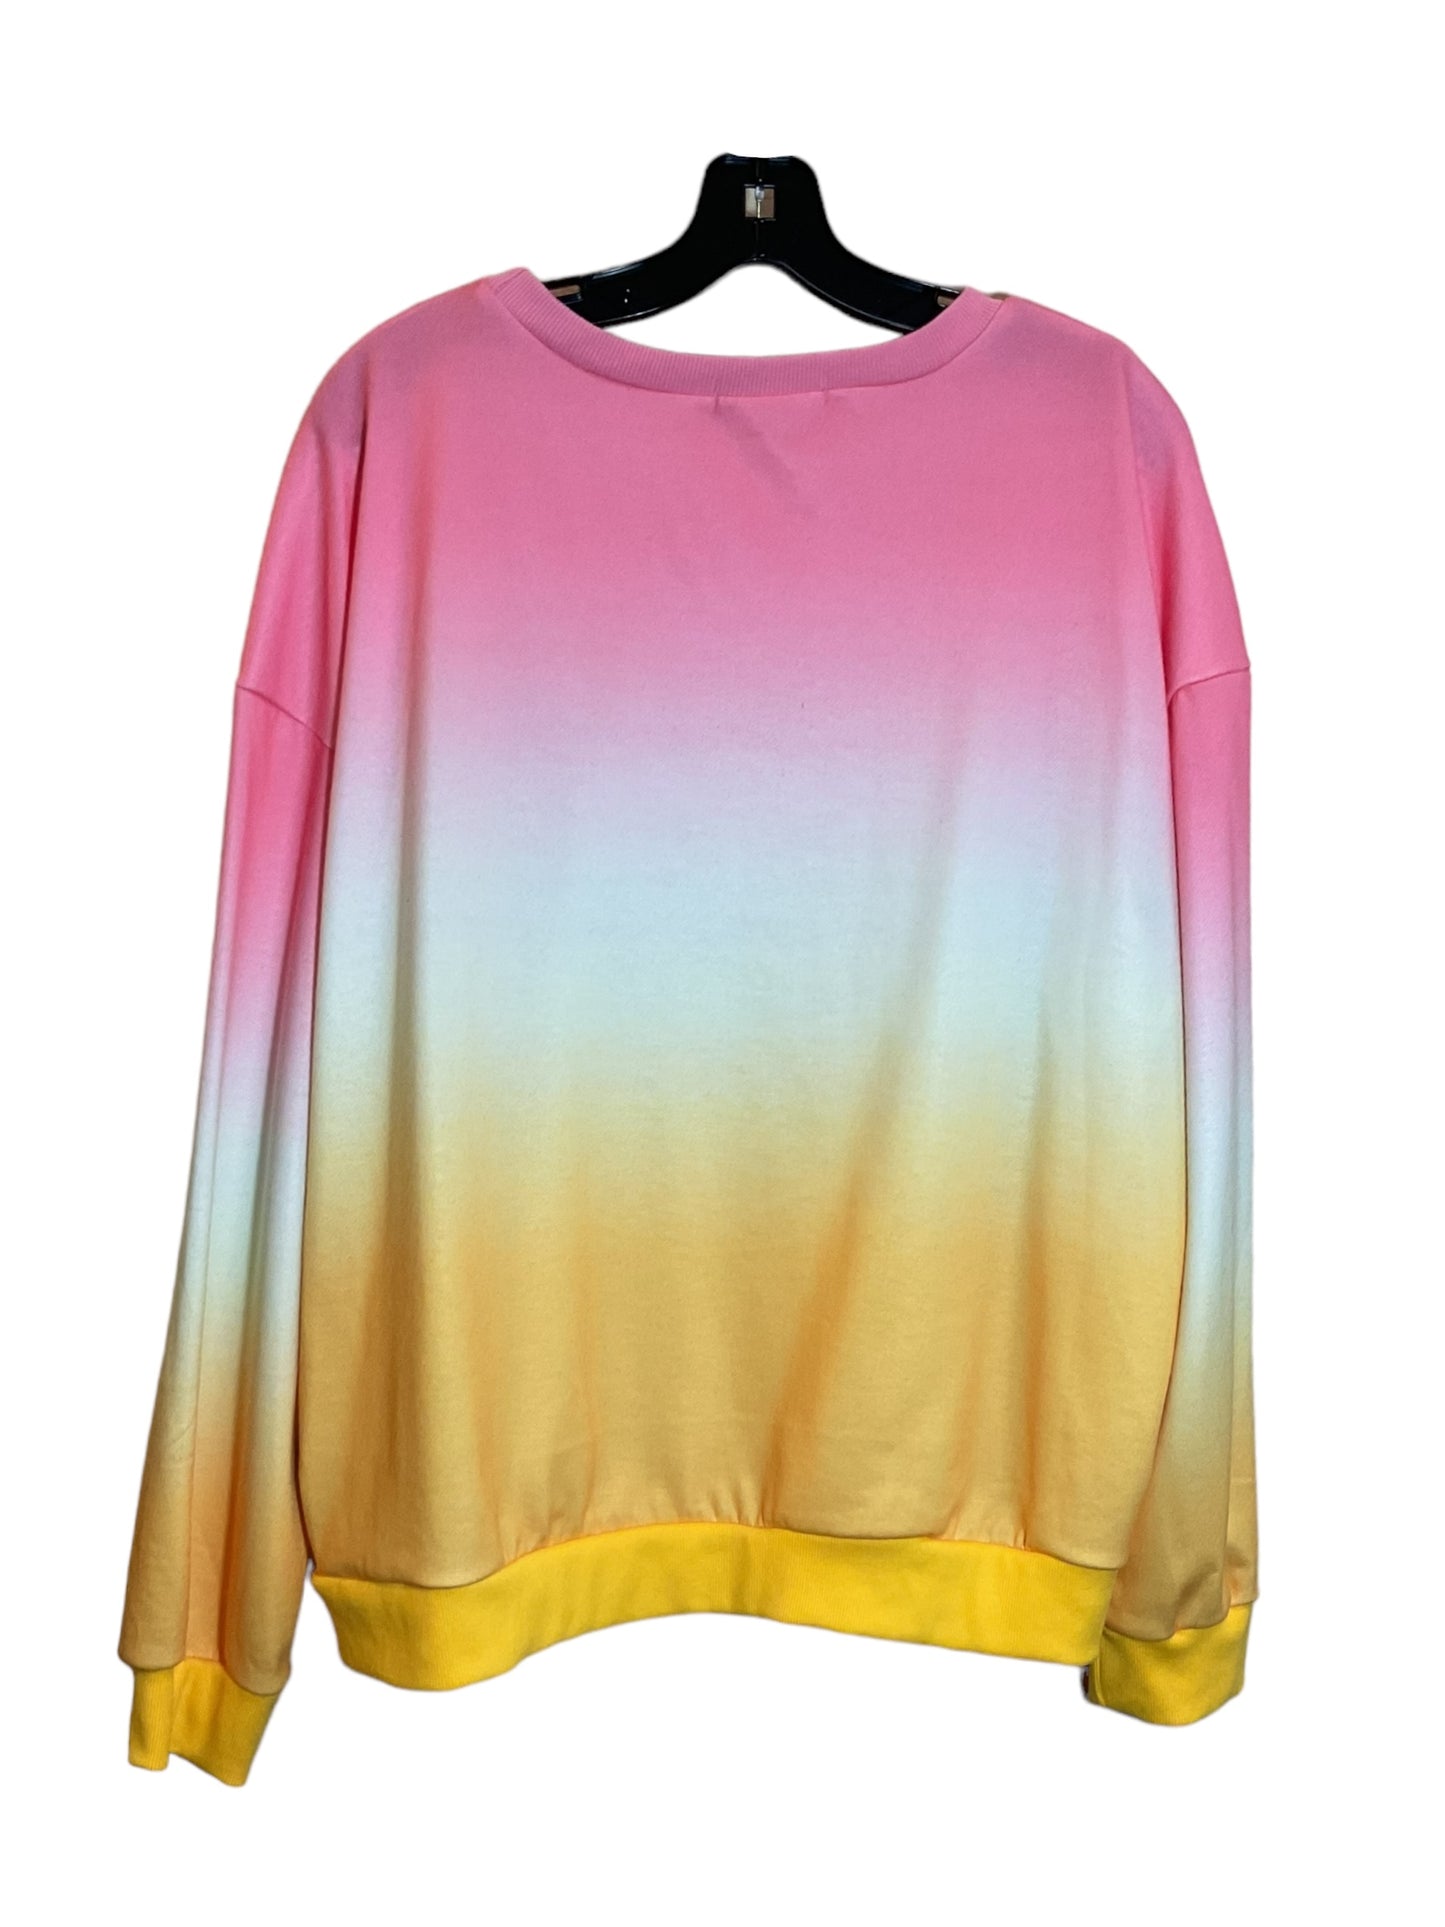 Sweatshirt Crewneck By Misslook  Size: 3x